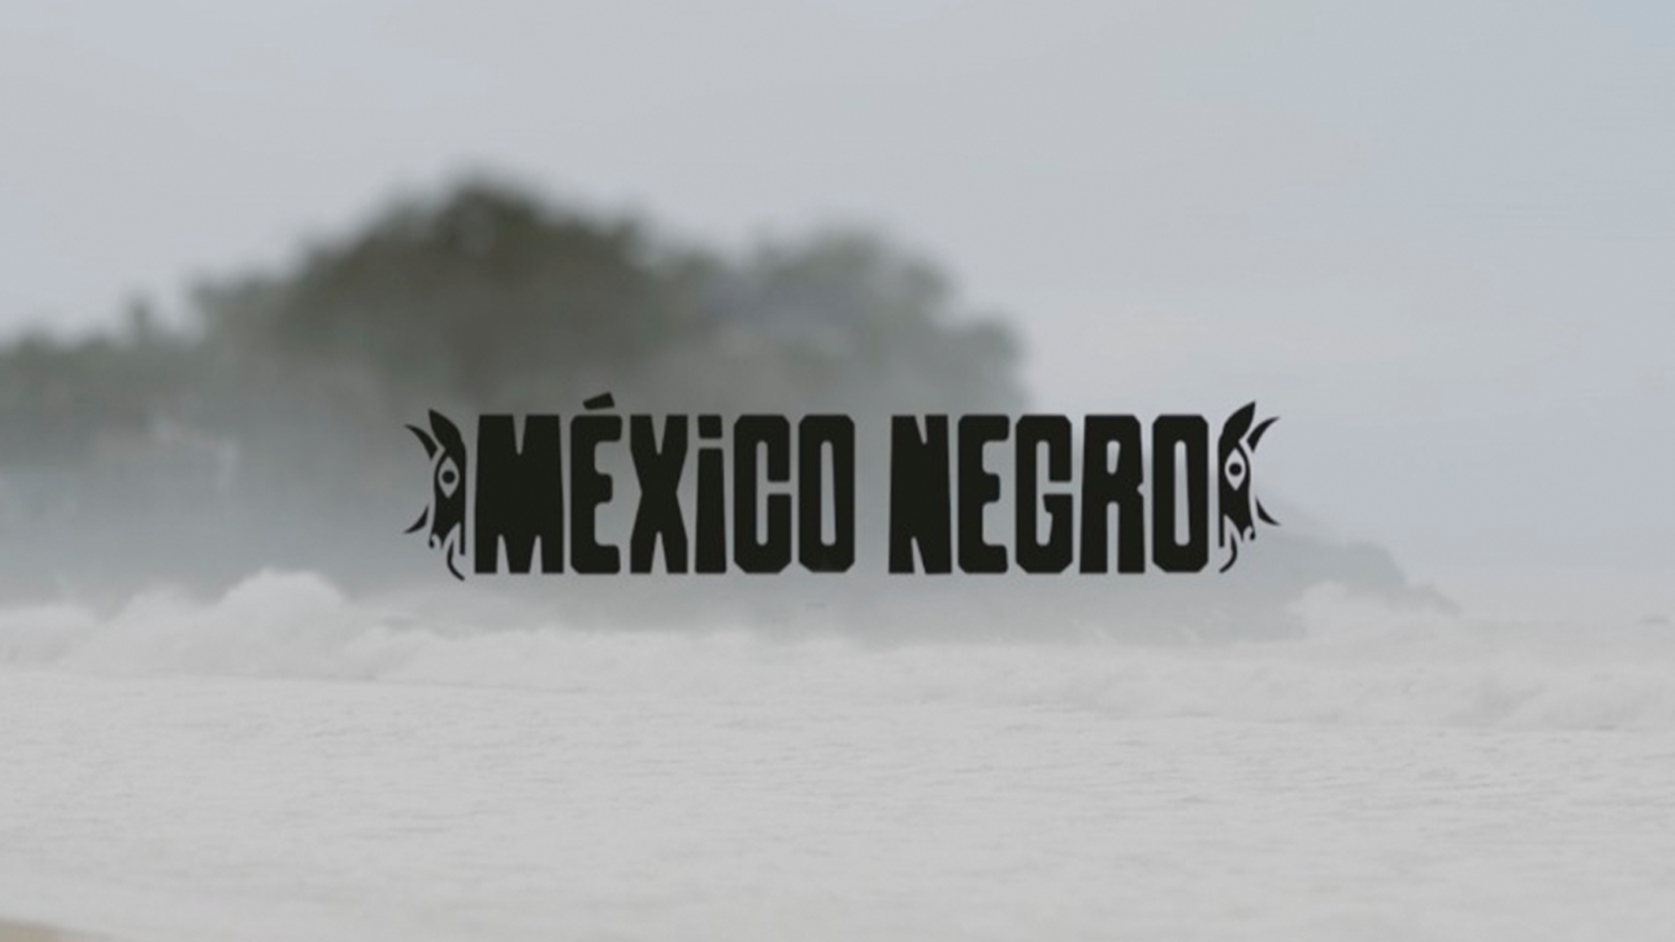 México Negro